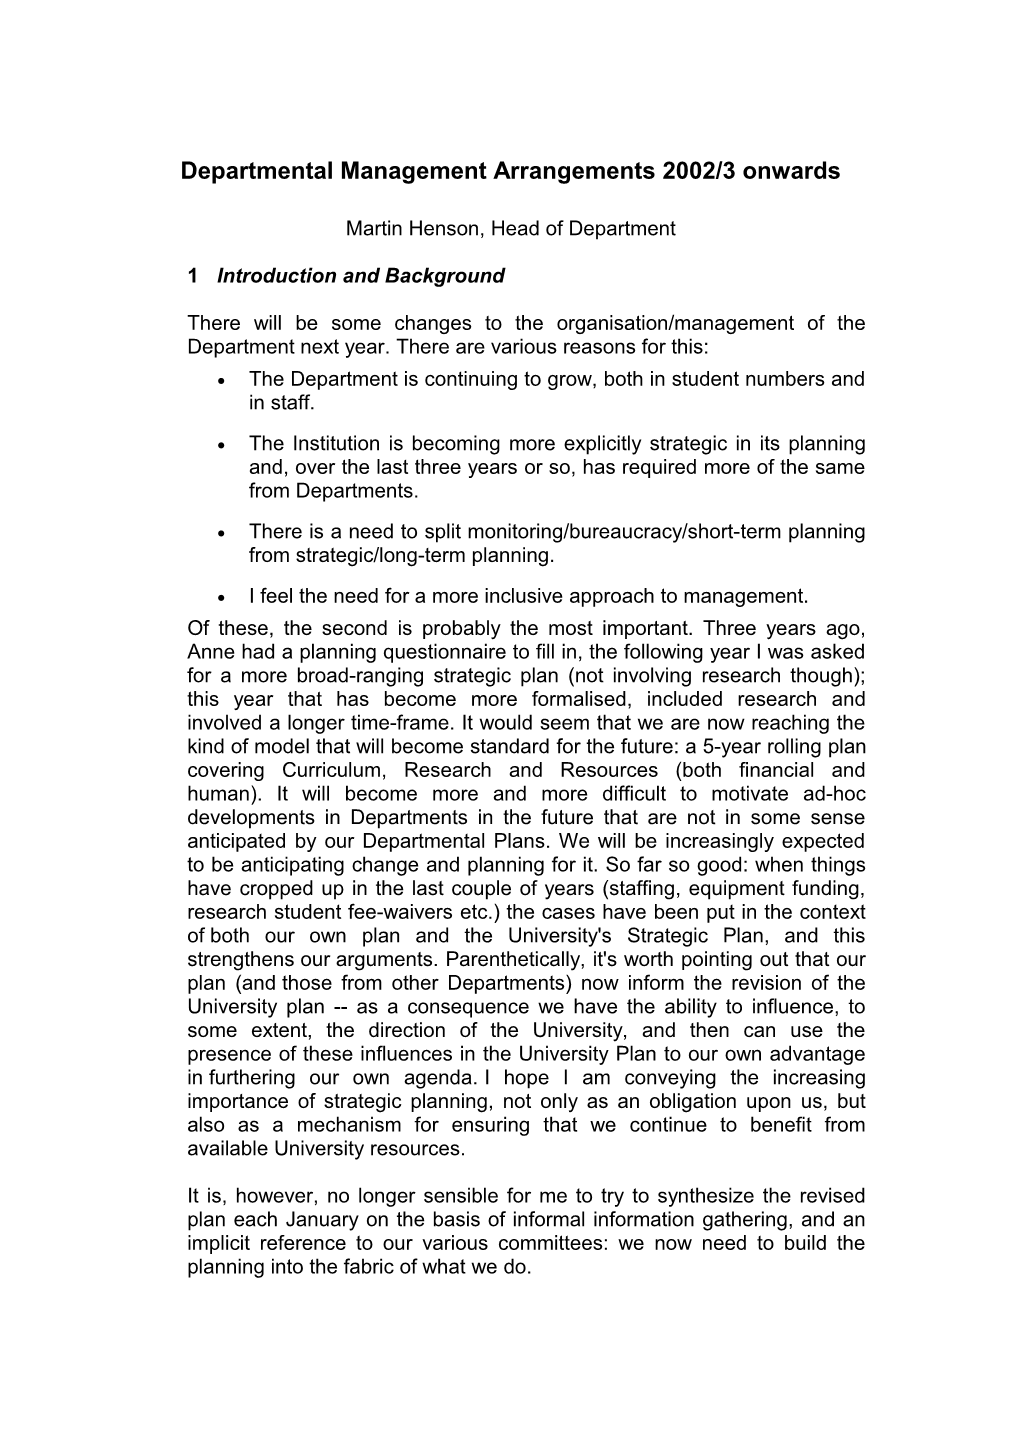 Departmental Management Arrangements 2002/3 Onwards